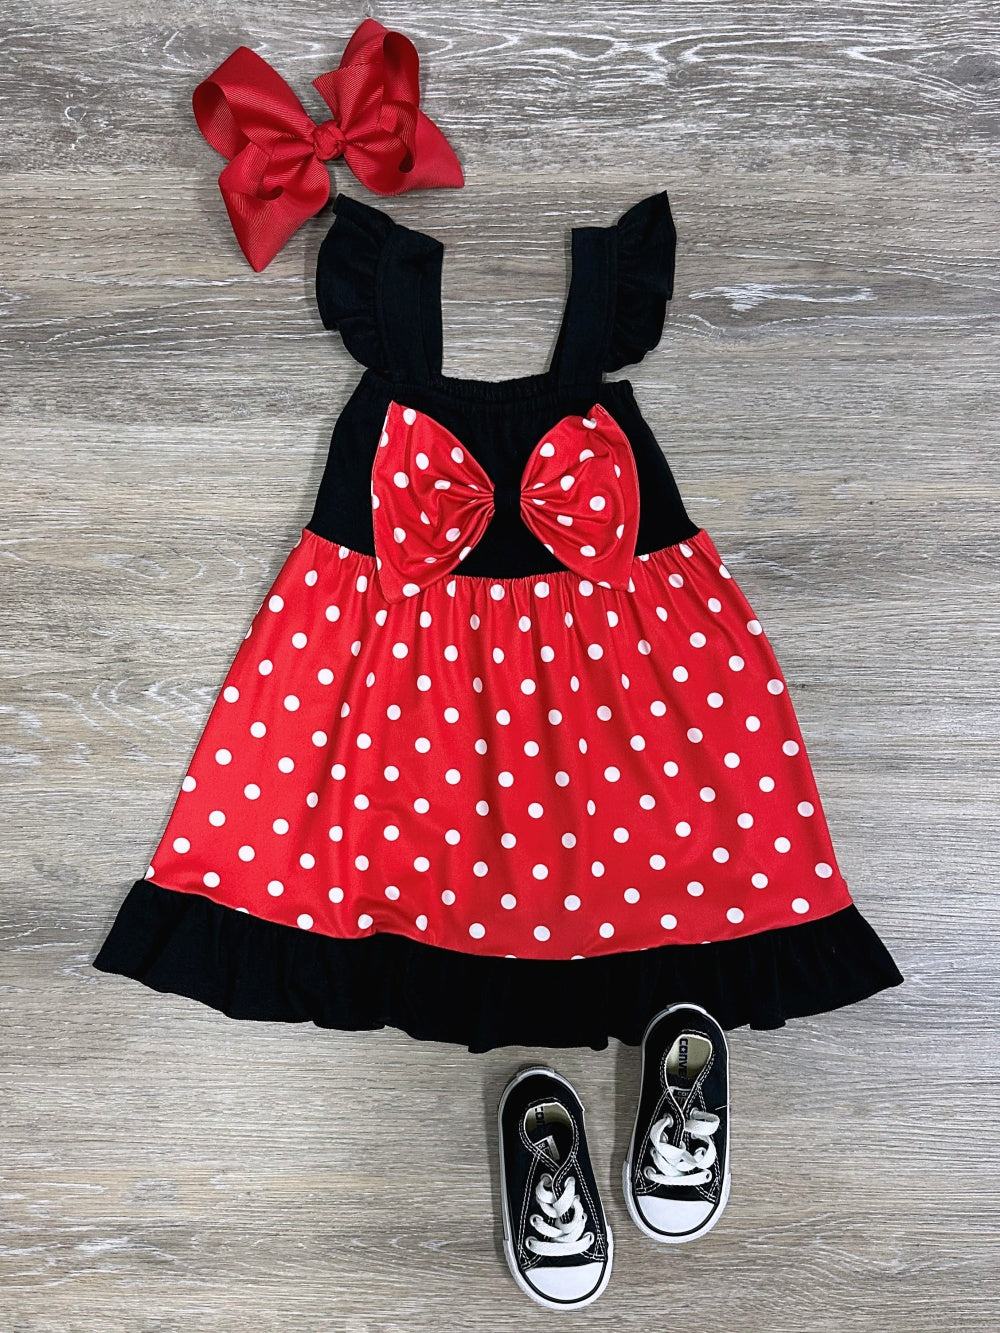 Princess Dress Up - Polka Dot Mouse - Sydney So Sweet